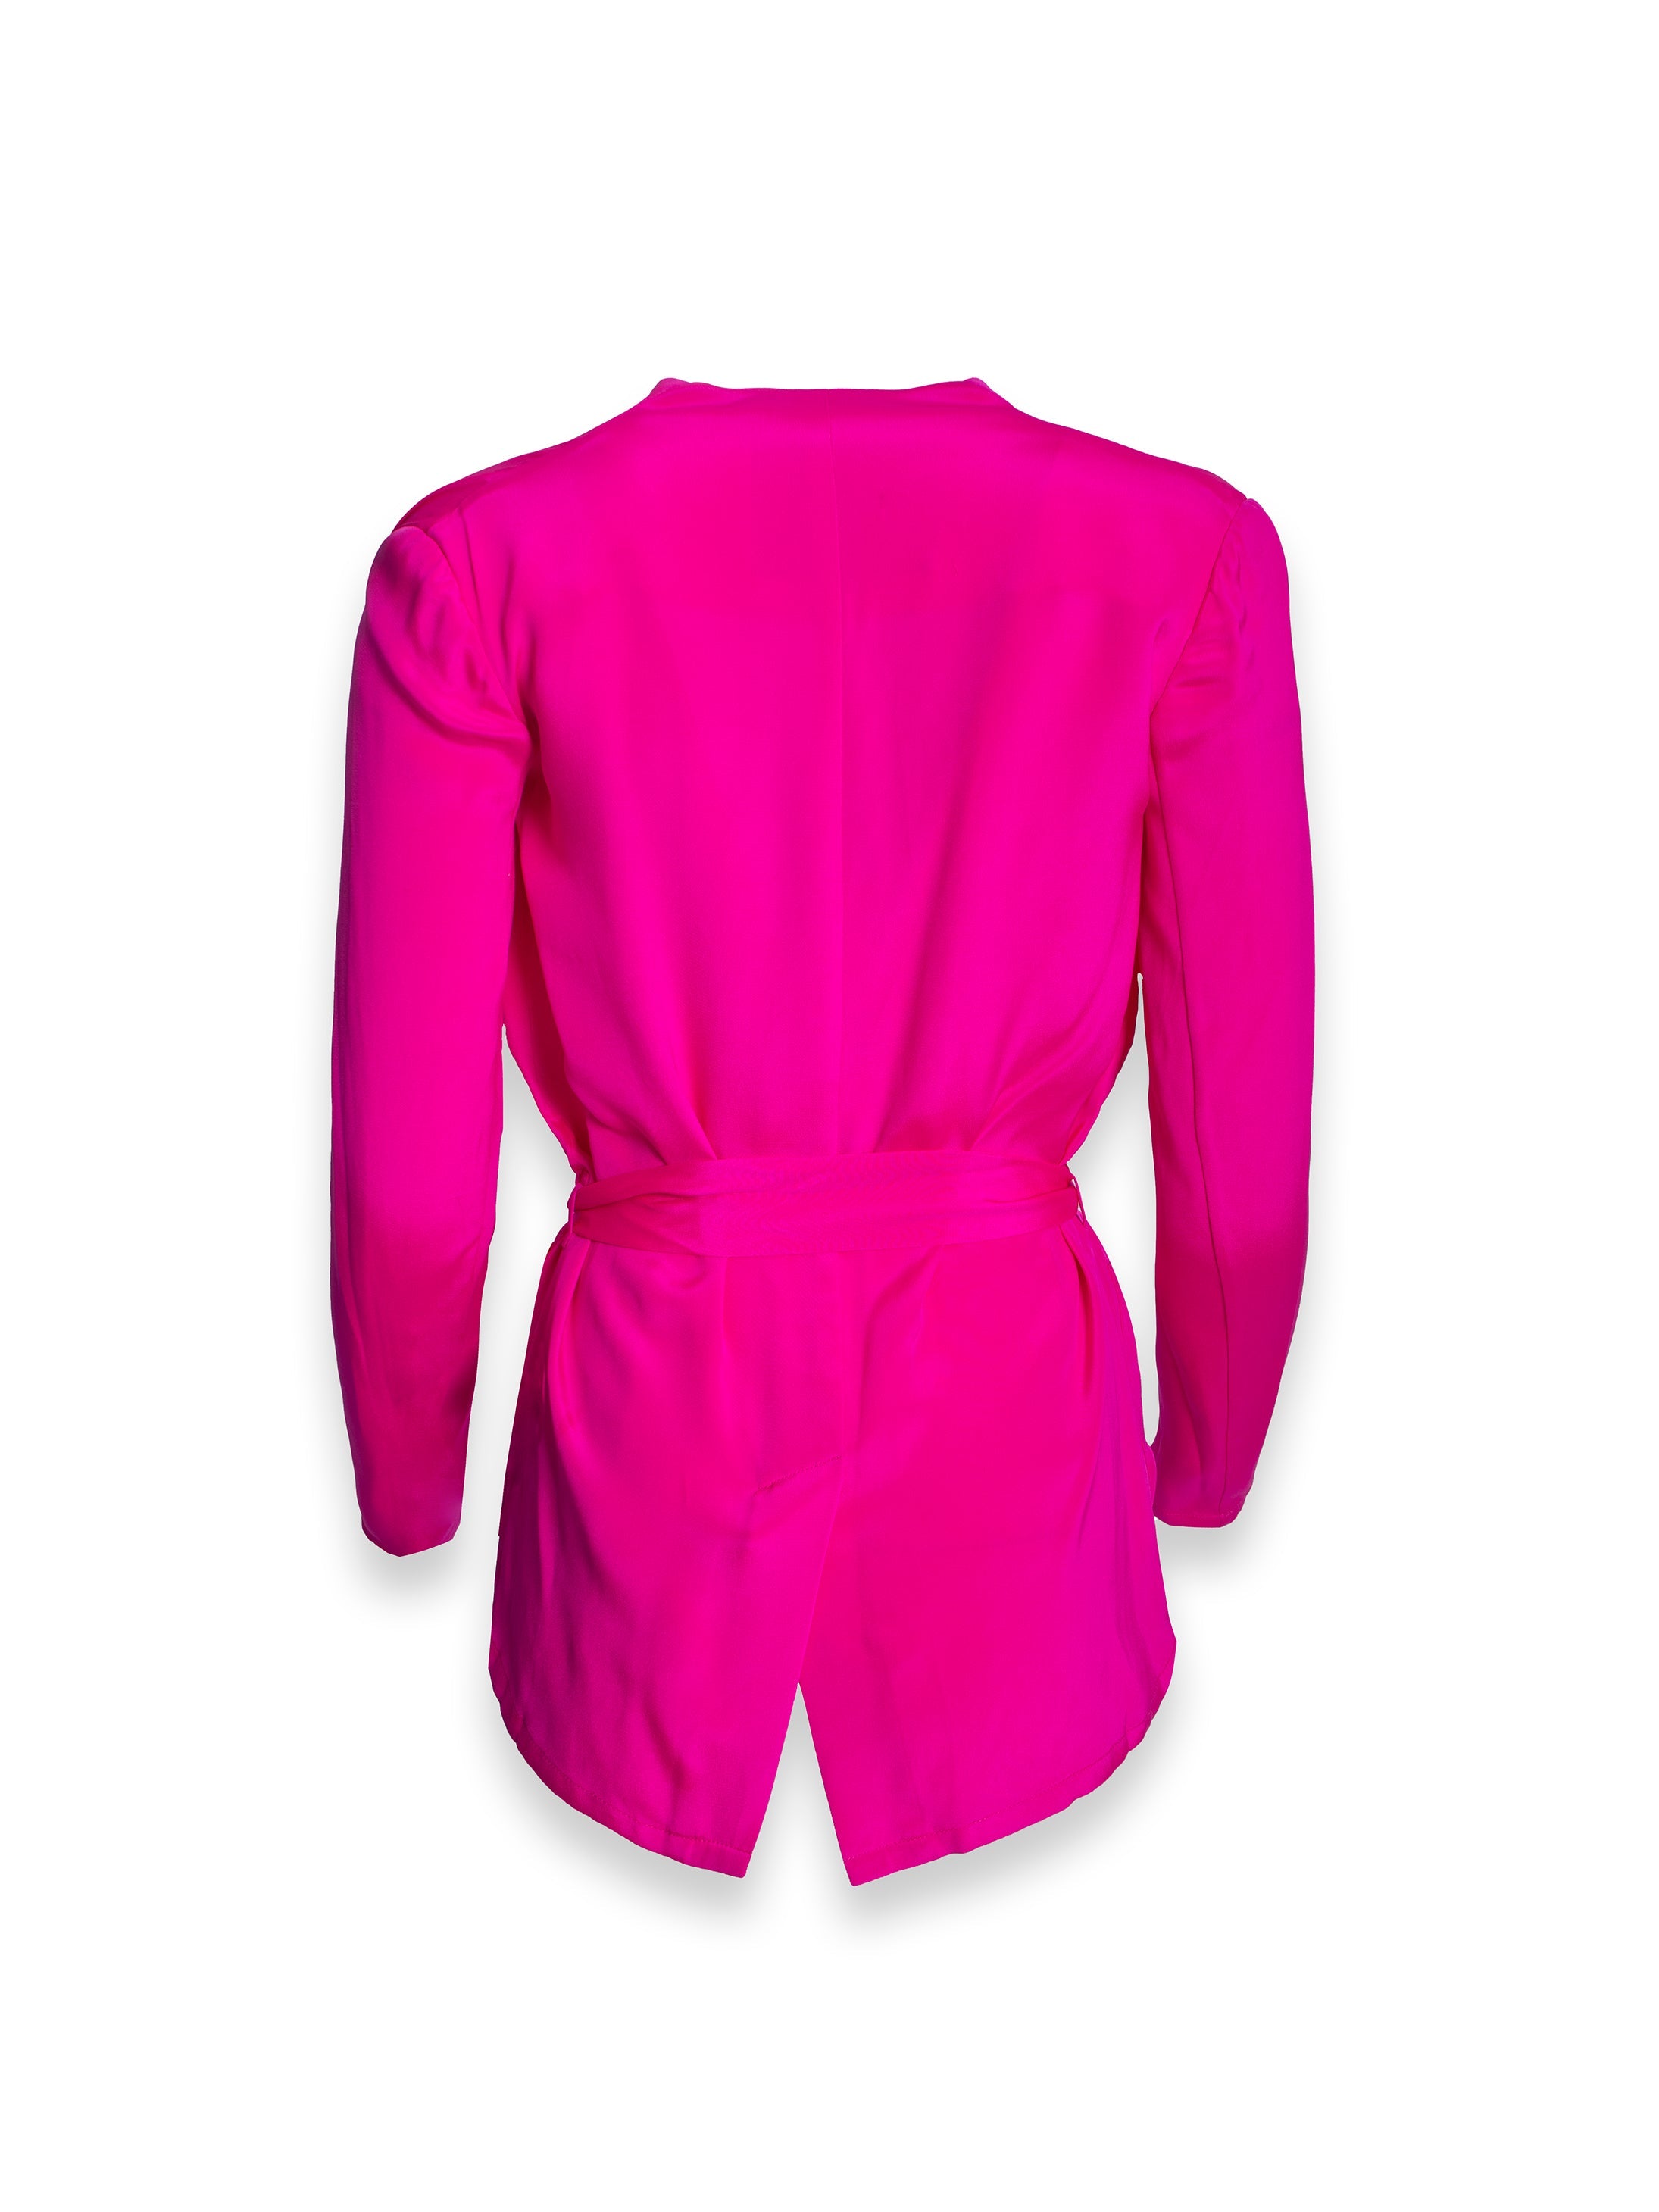 Hot Pink Light Weight Blazer Jacket with Tie Up Detail